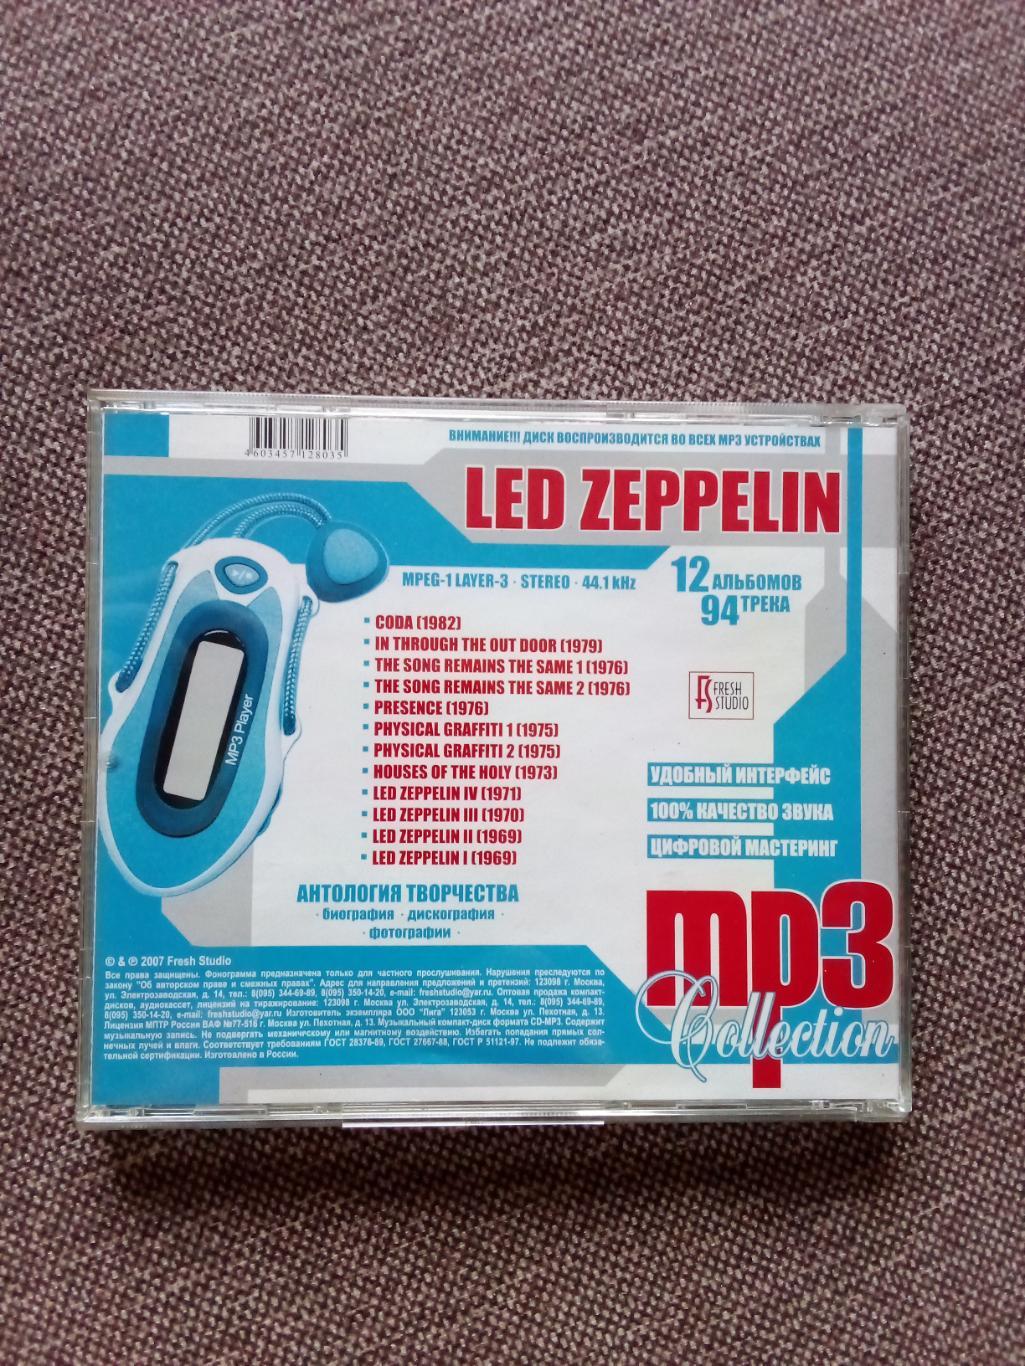 CD MP - 3 диск : группаLed Zeppelin1969 - 1982 гг. 12 альбомов (Рок-музыка 1